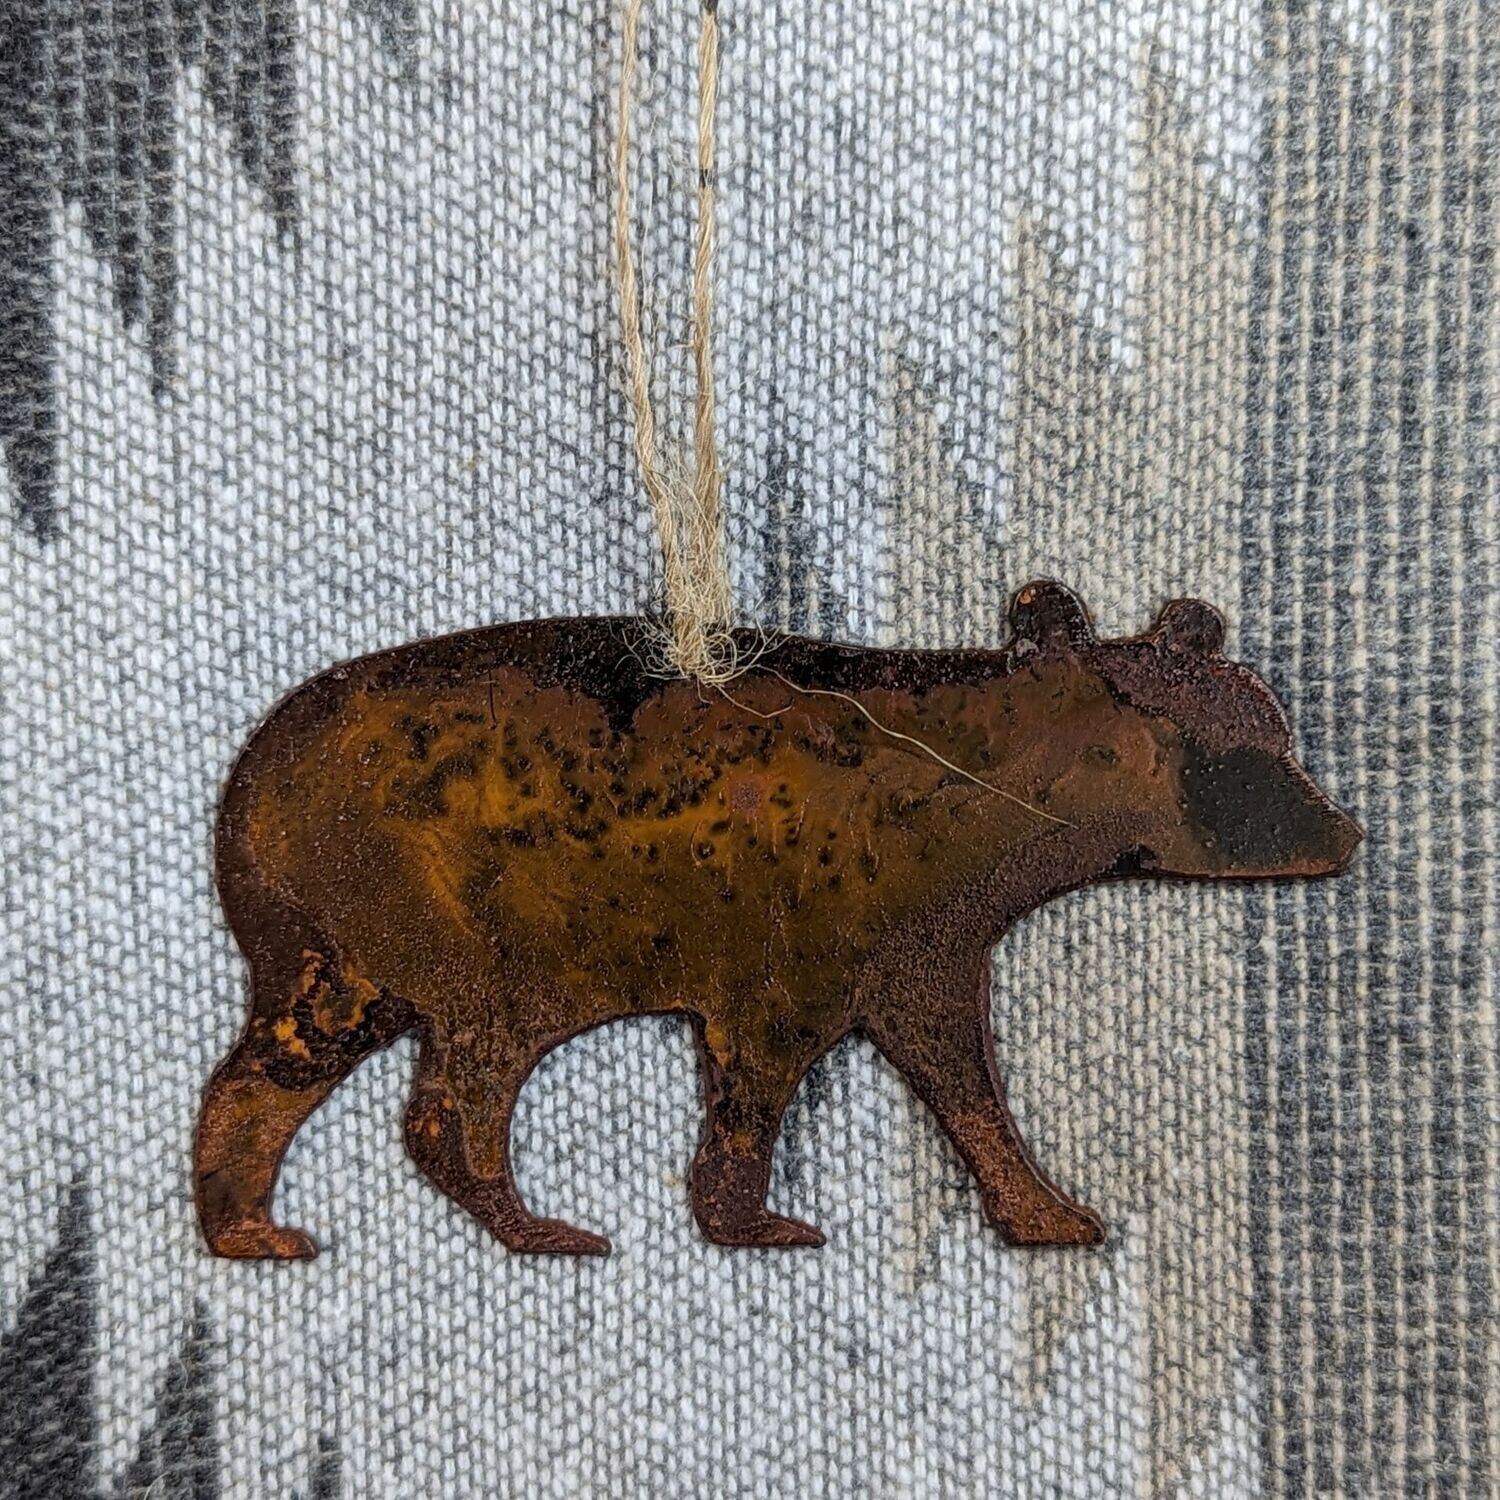 Rusted Metal Walking Bear Ornament